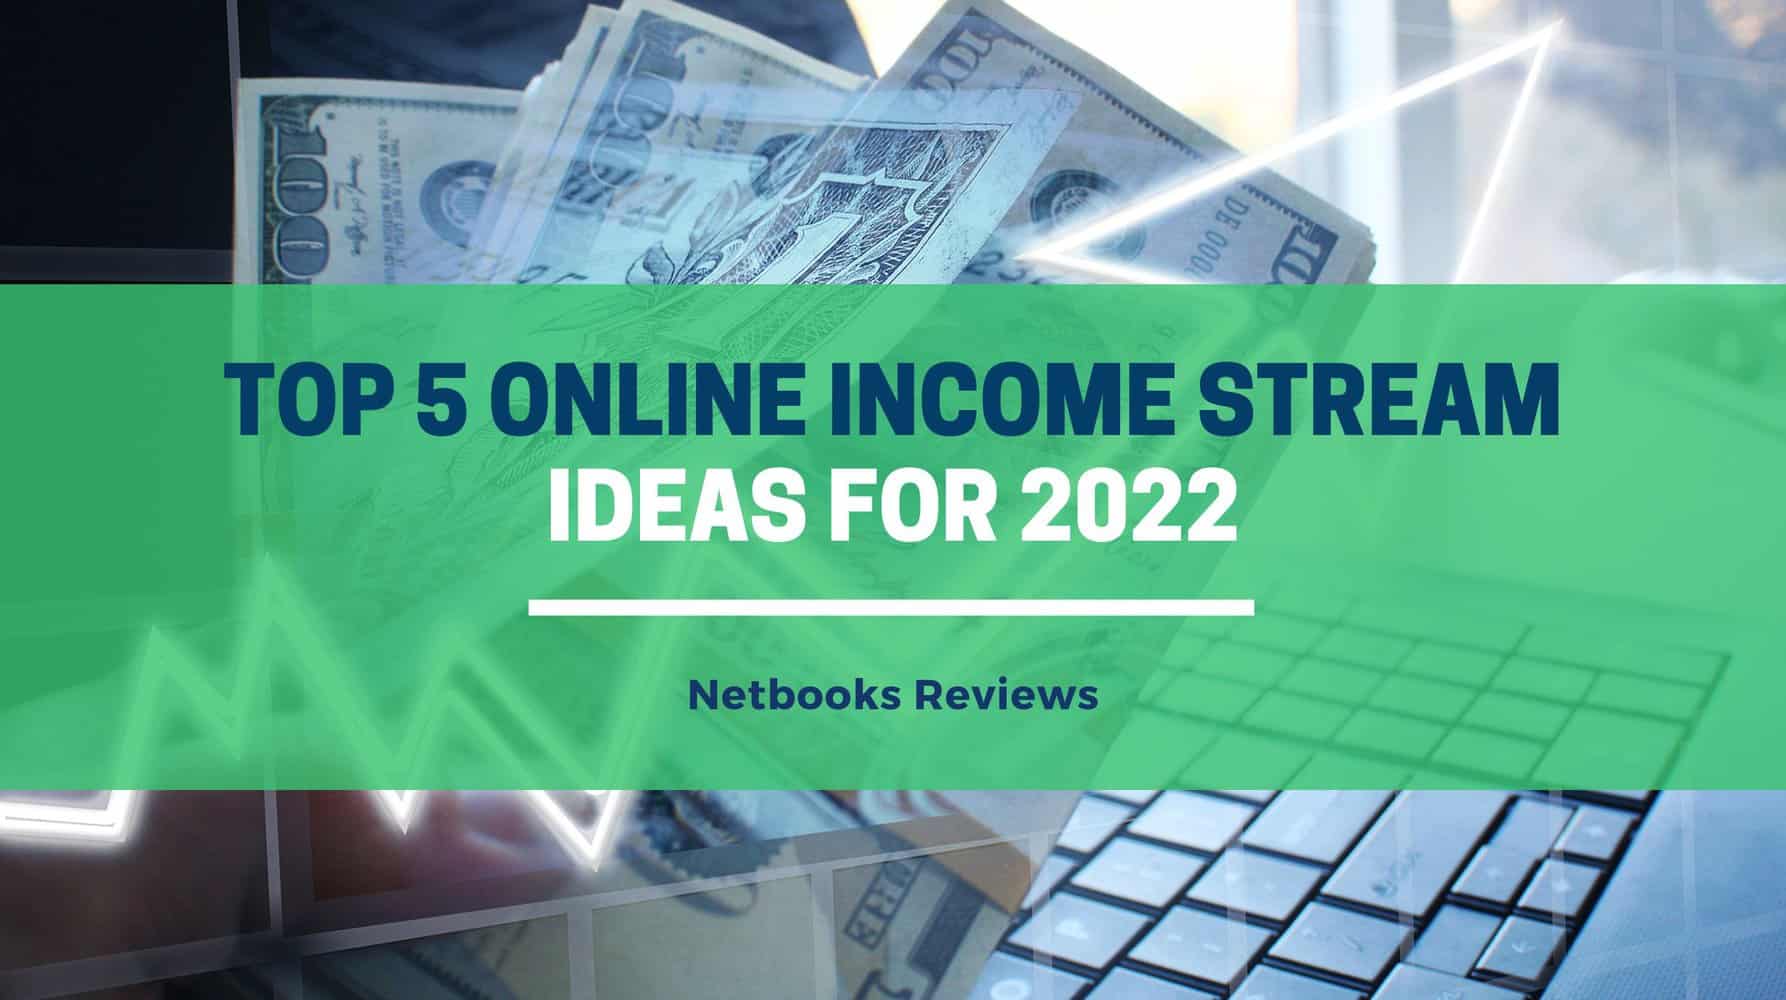 Top 5 Online Income Stream Ideas